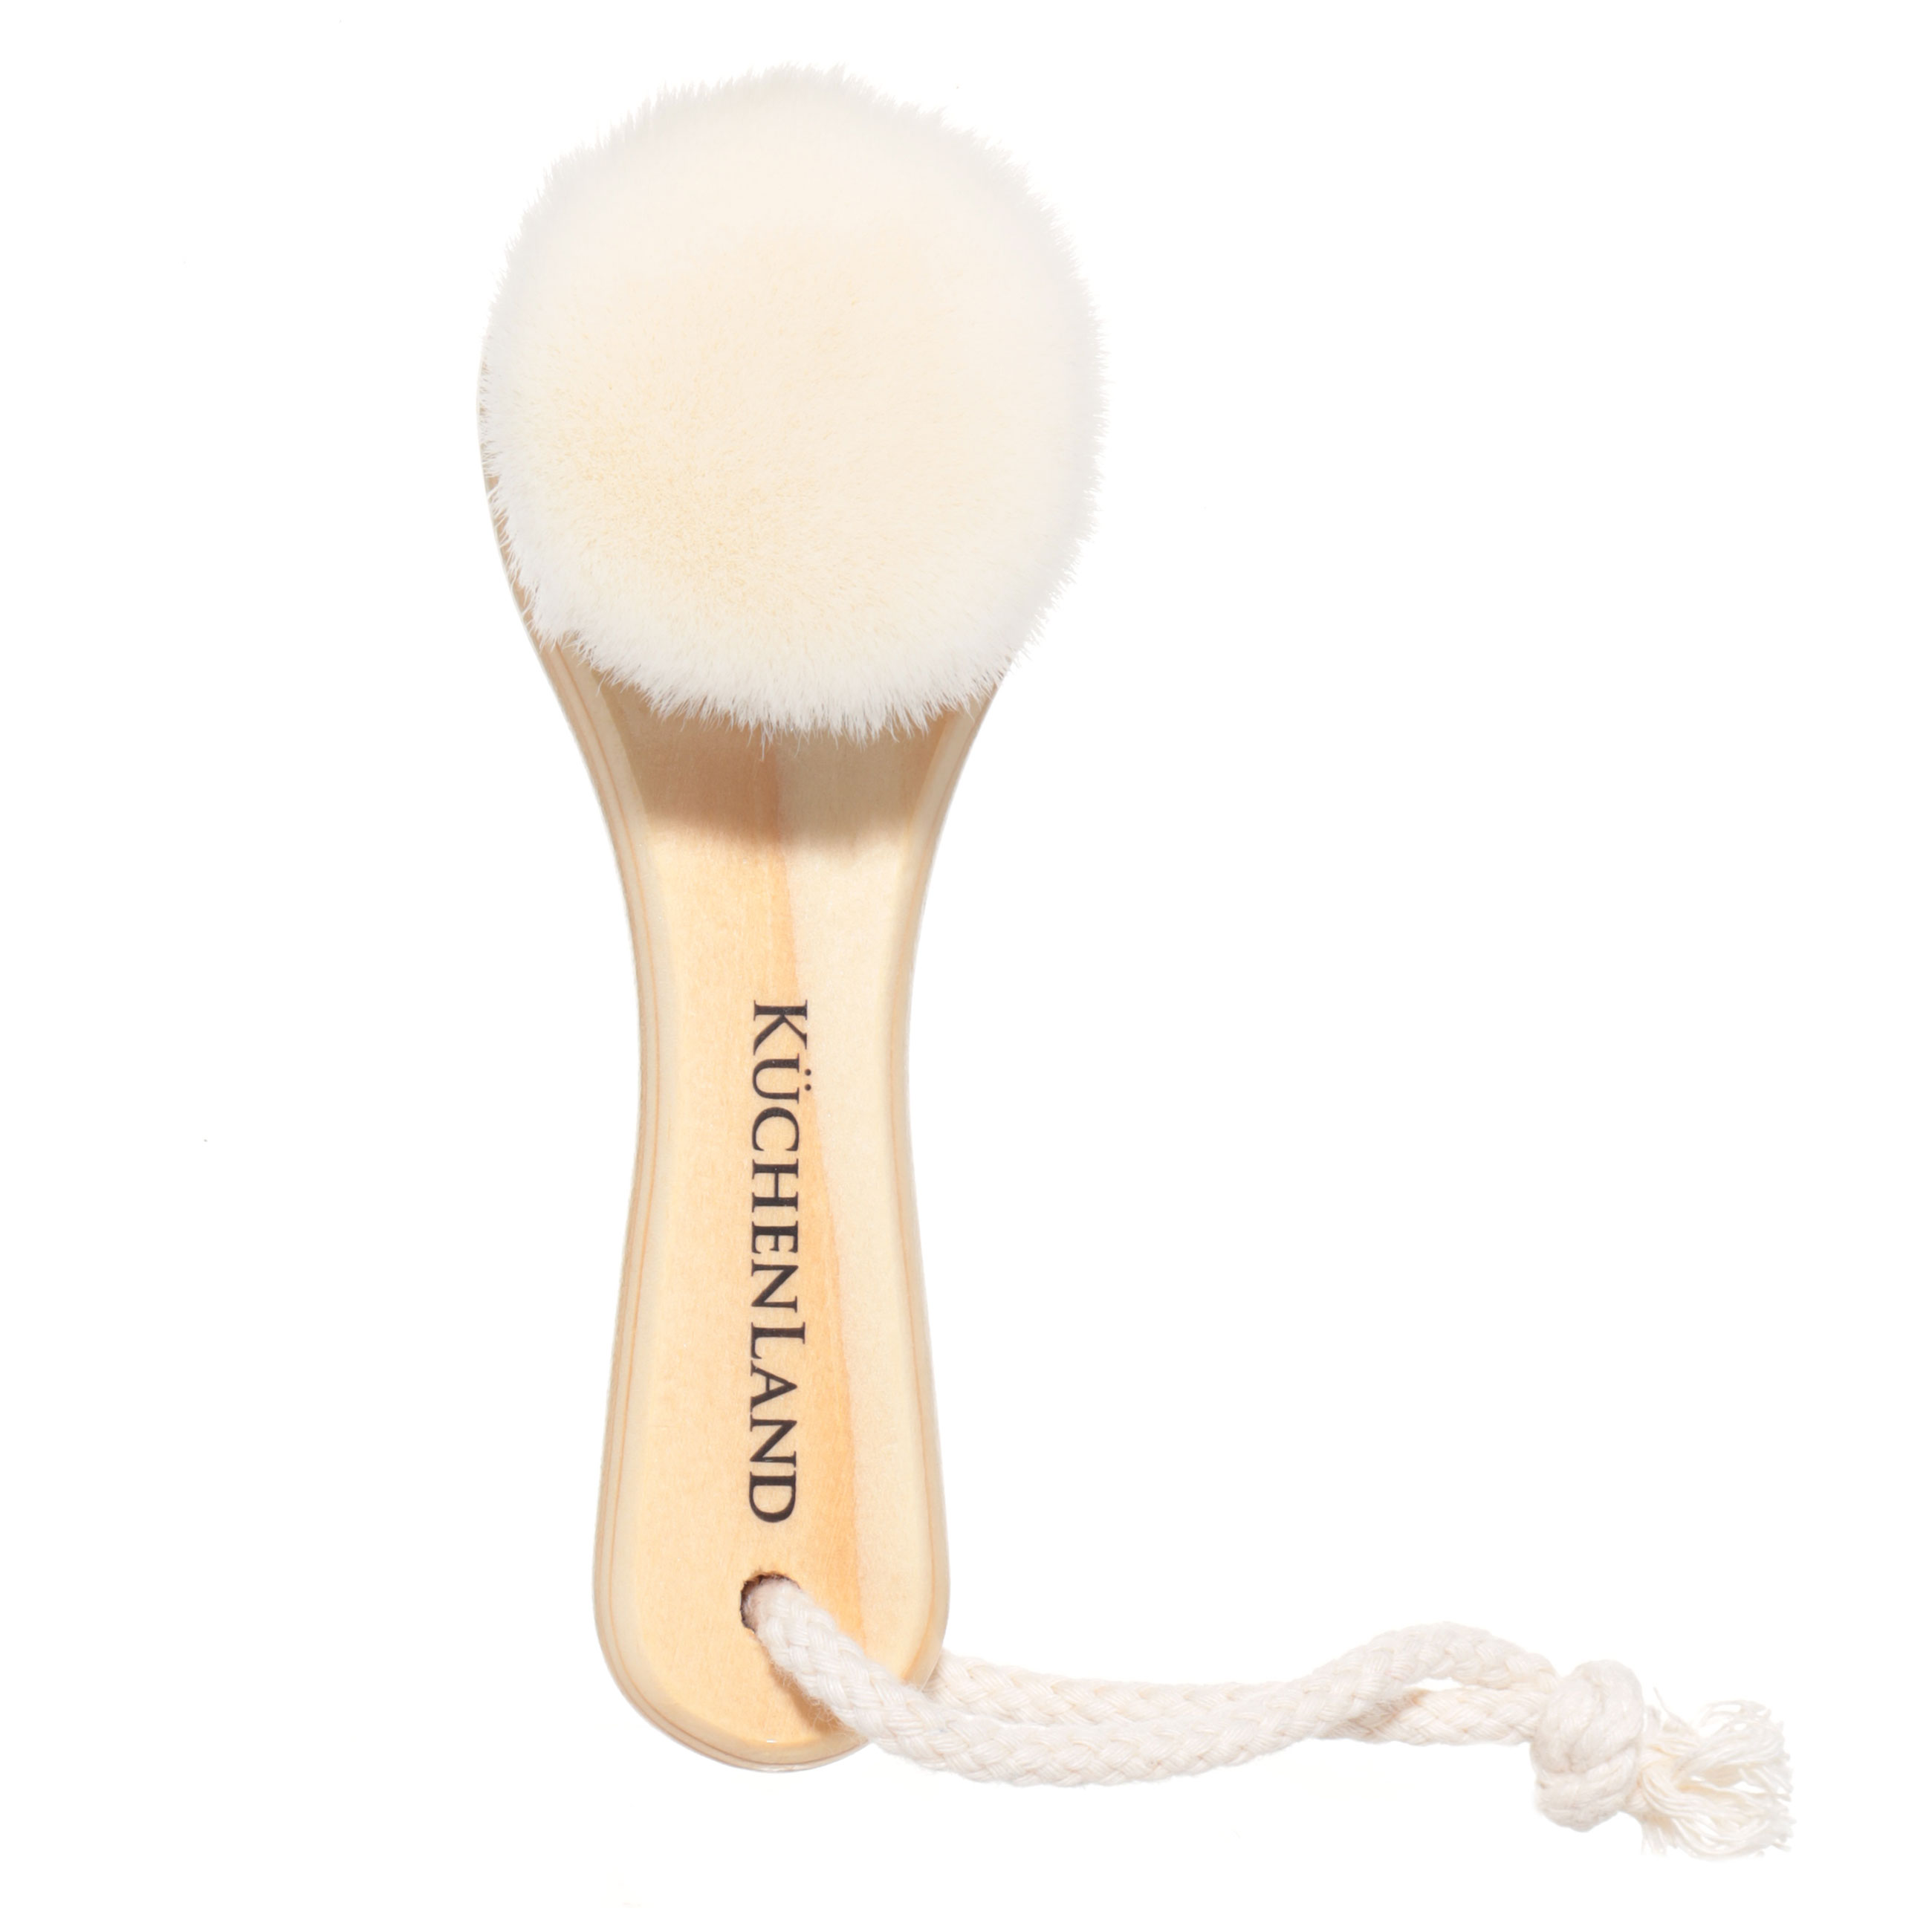 Facial cleansing brush, massage, 5x15 cm, artificial fiber / wood, white, Eco life изображение № 3